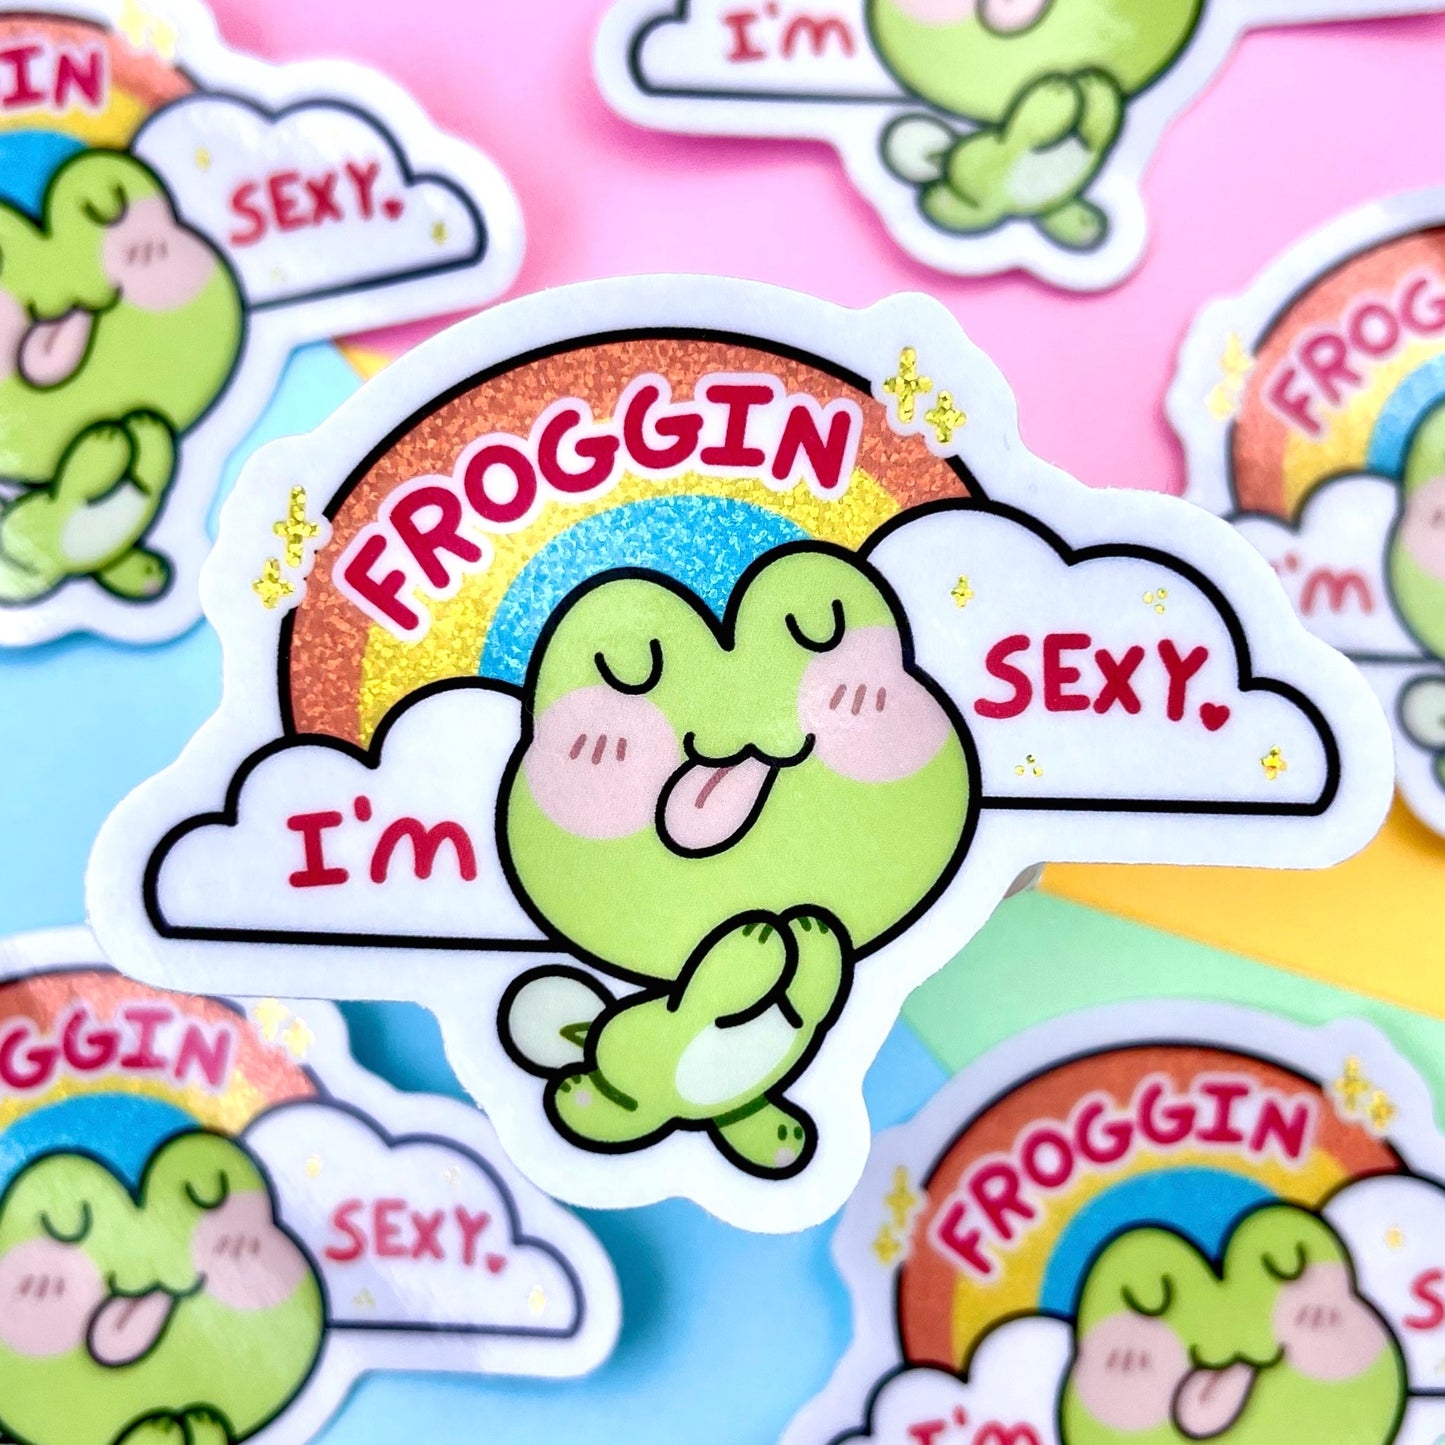 I’m Froggin Sexy. Sticker